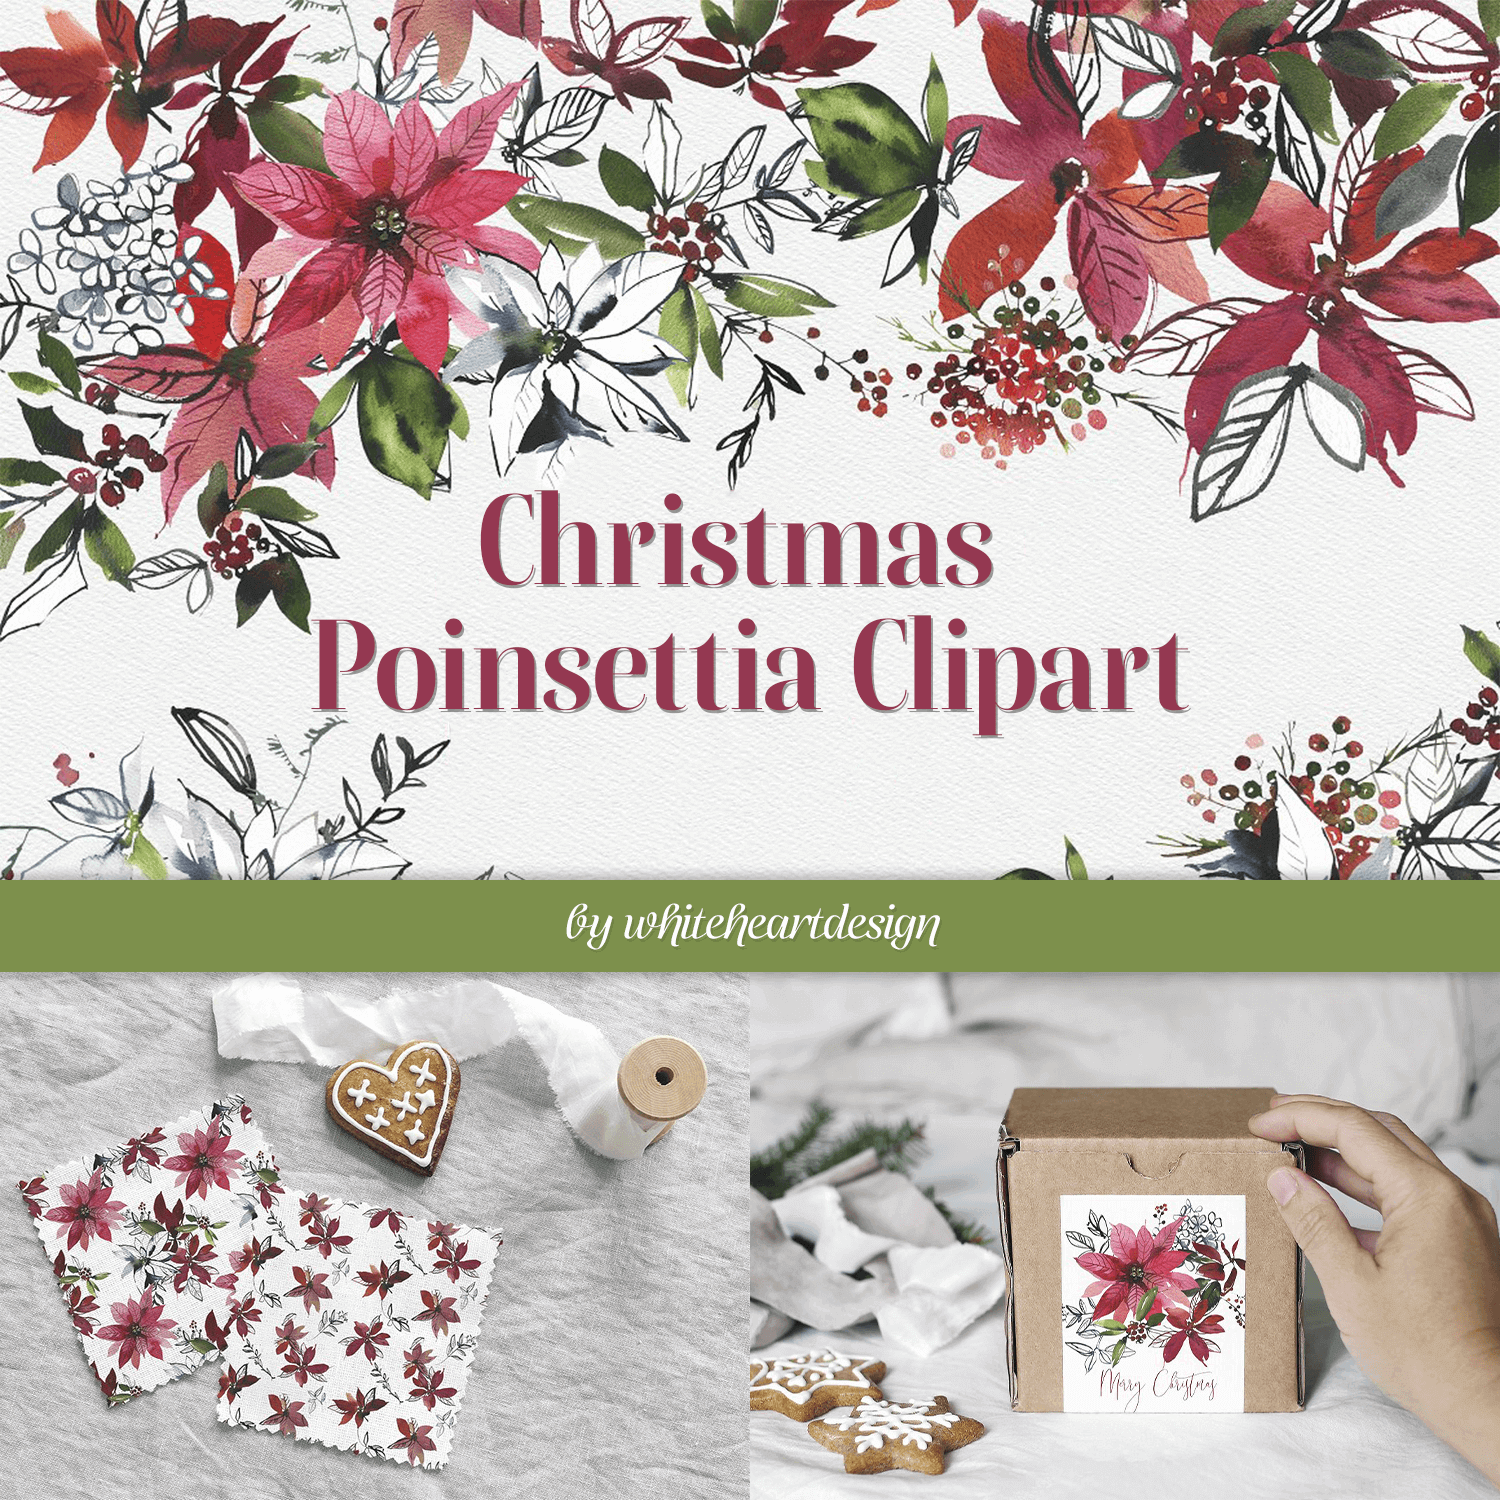 Christmas Poinsettia Clipart on the White Background.